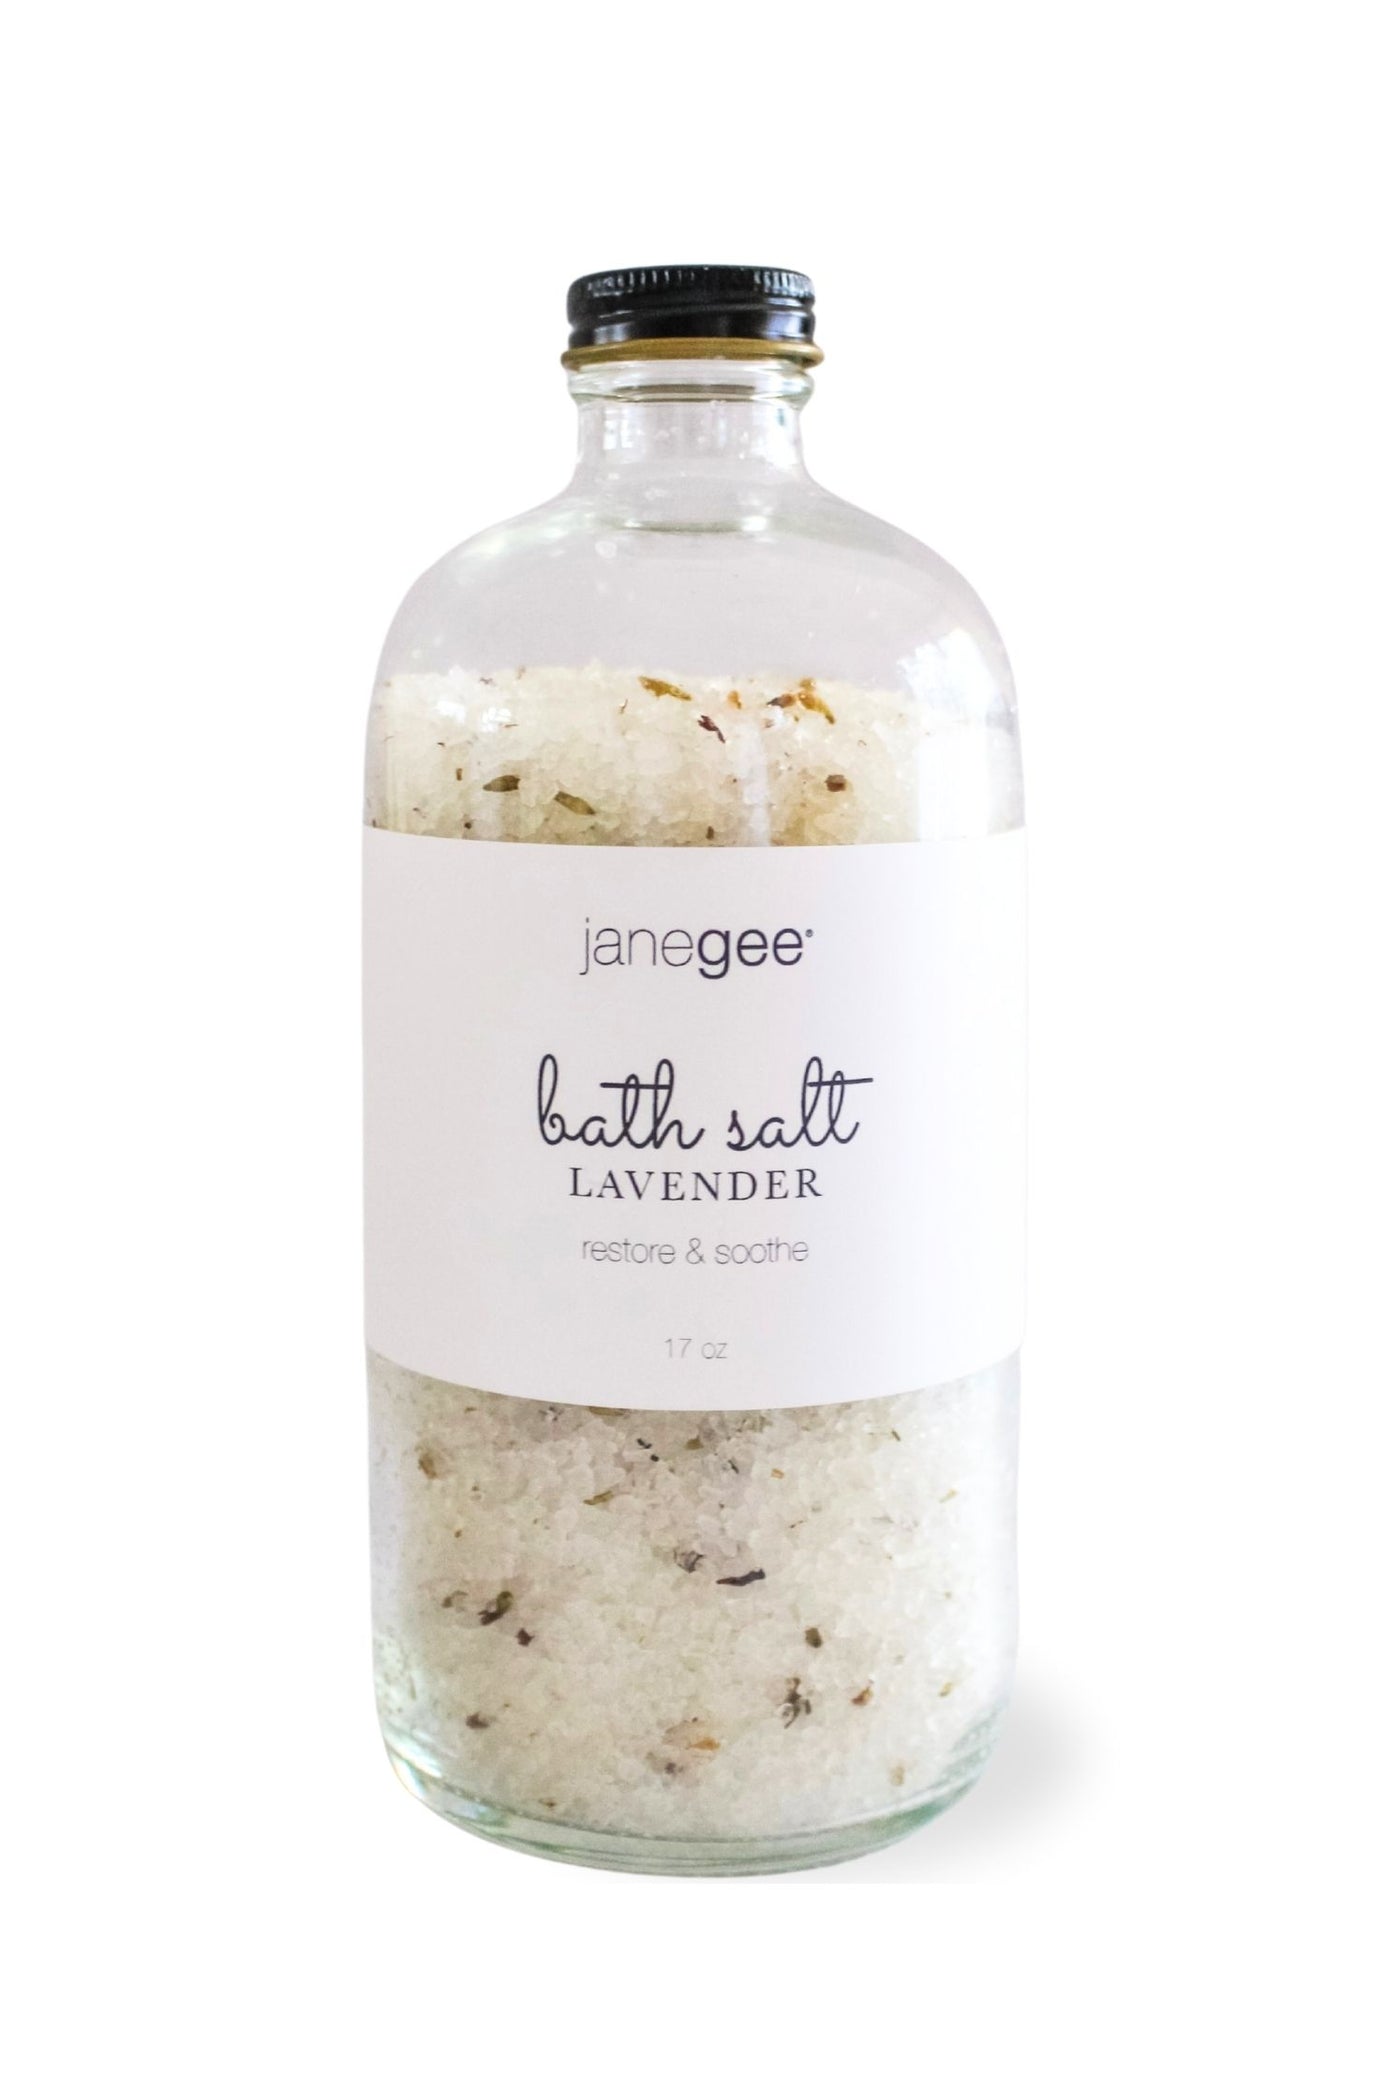 janegee Lavender Bath Salt